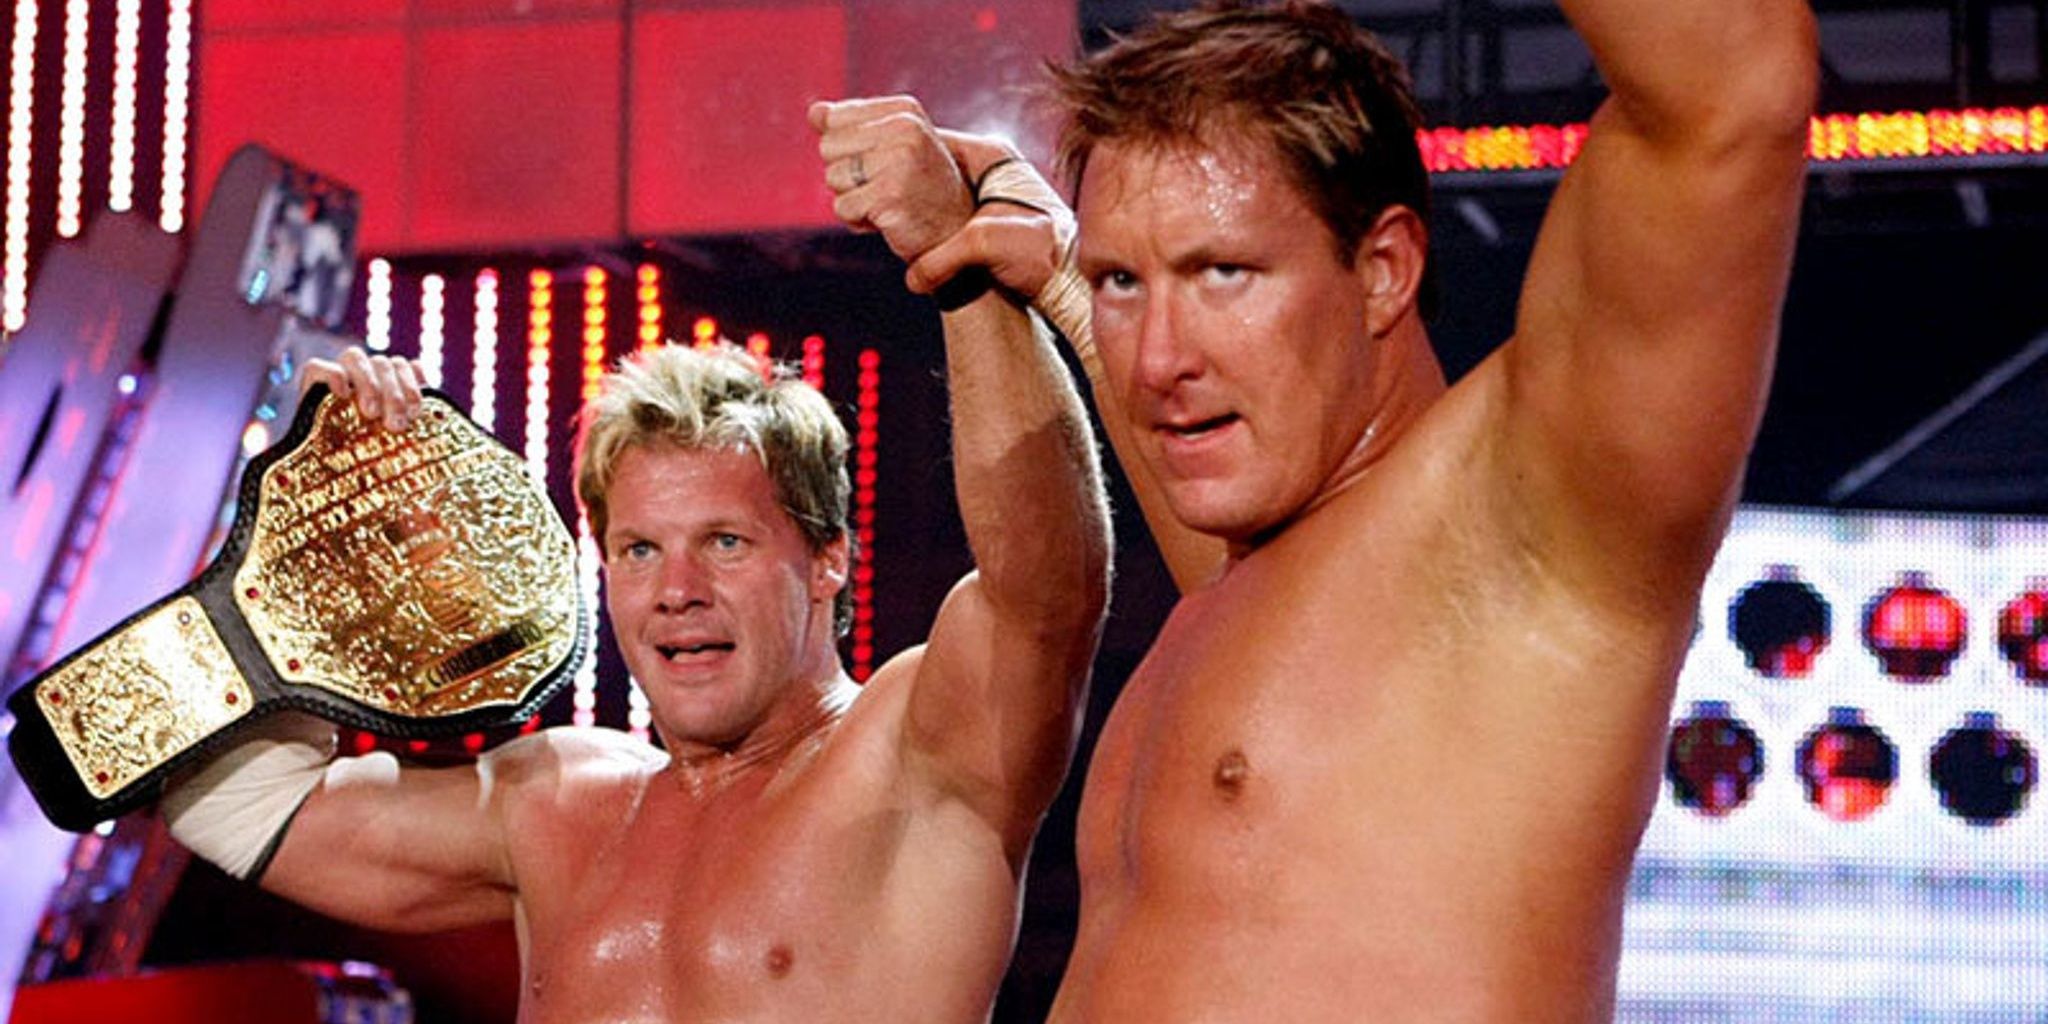 Chris Jericho and Lance Cade together celebrating